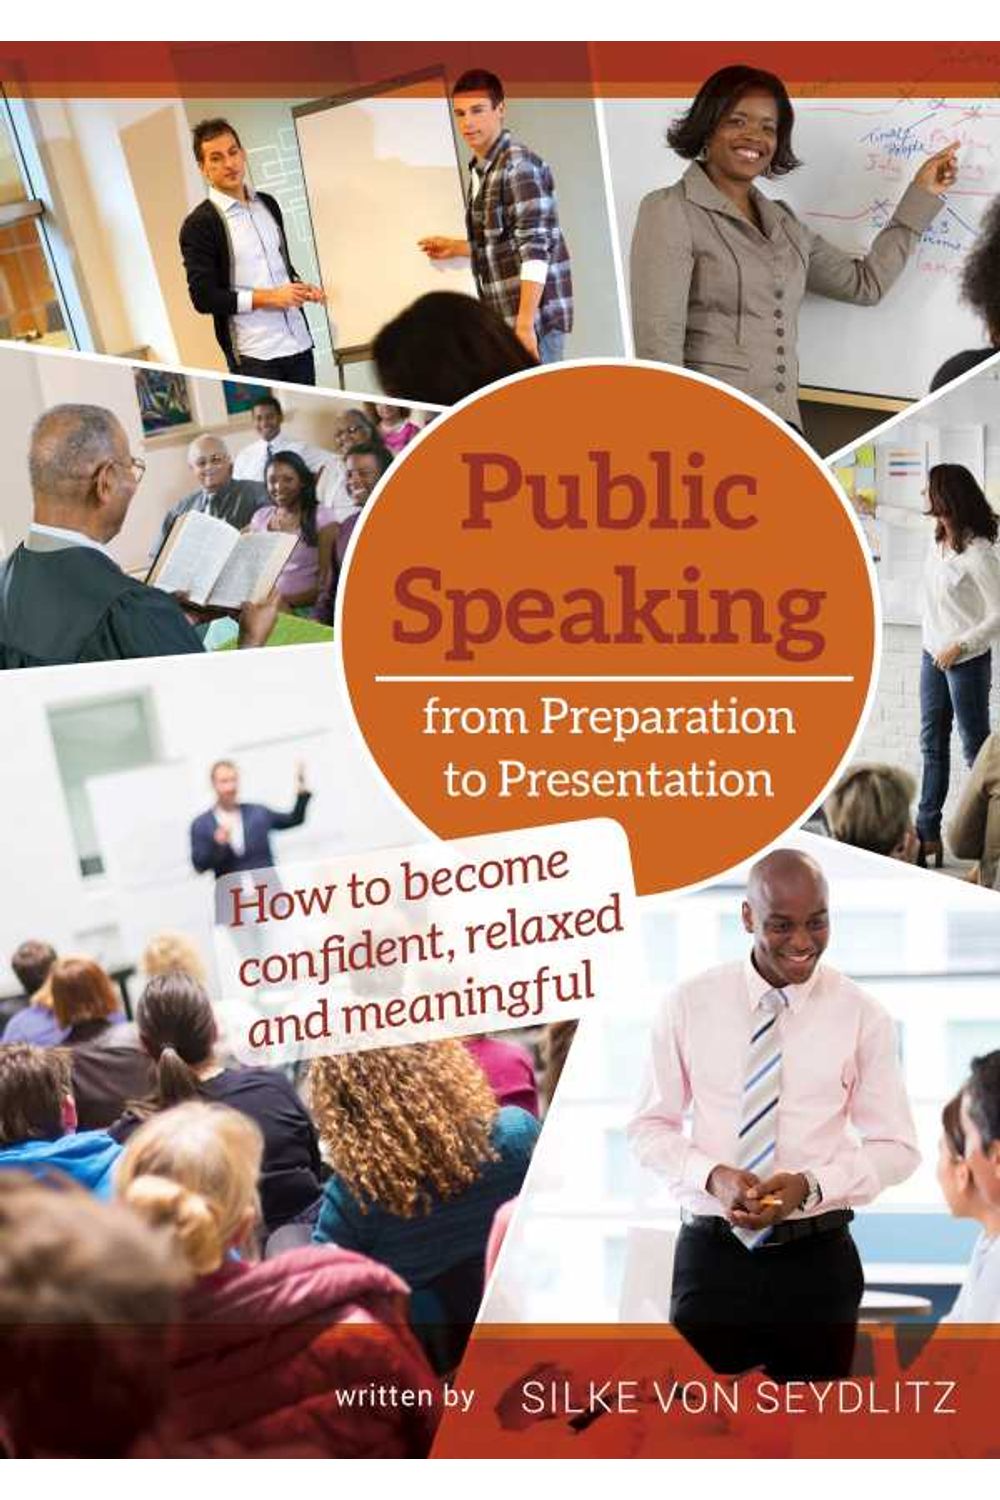 bw-public-speaking-ndash-from-preparation-to-presentation-oryx-publishers-9789991678665